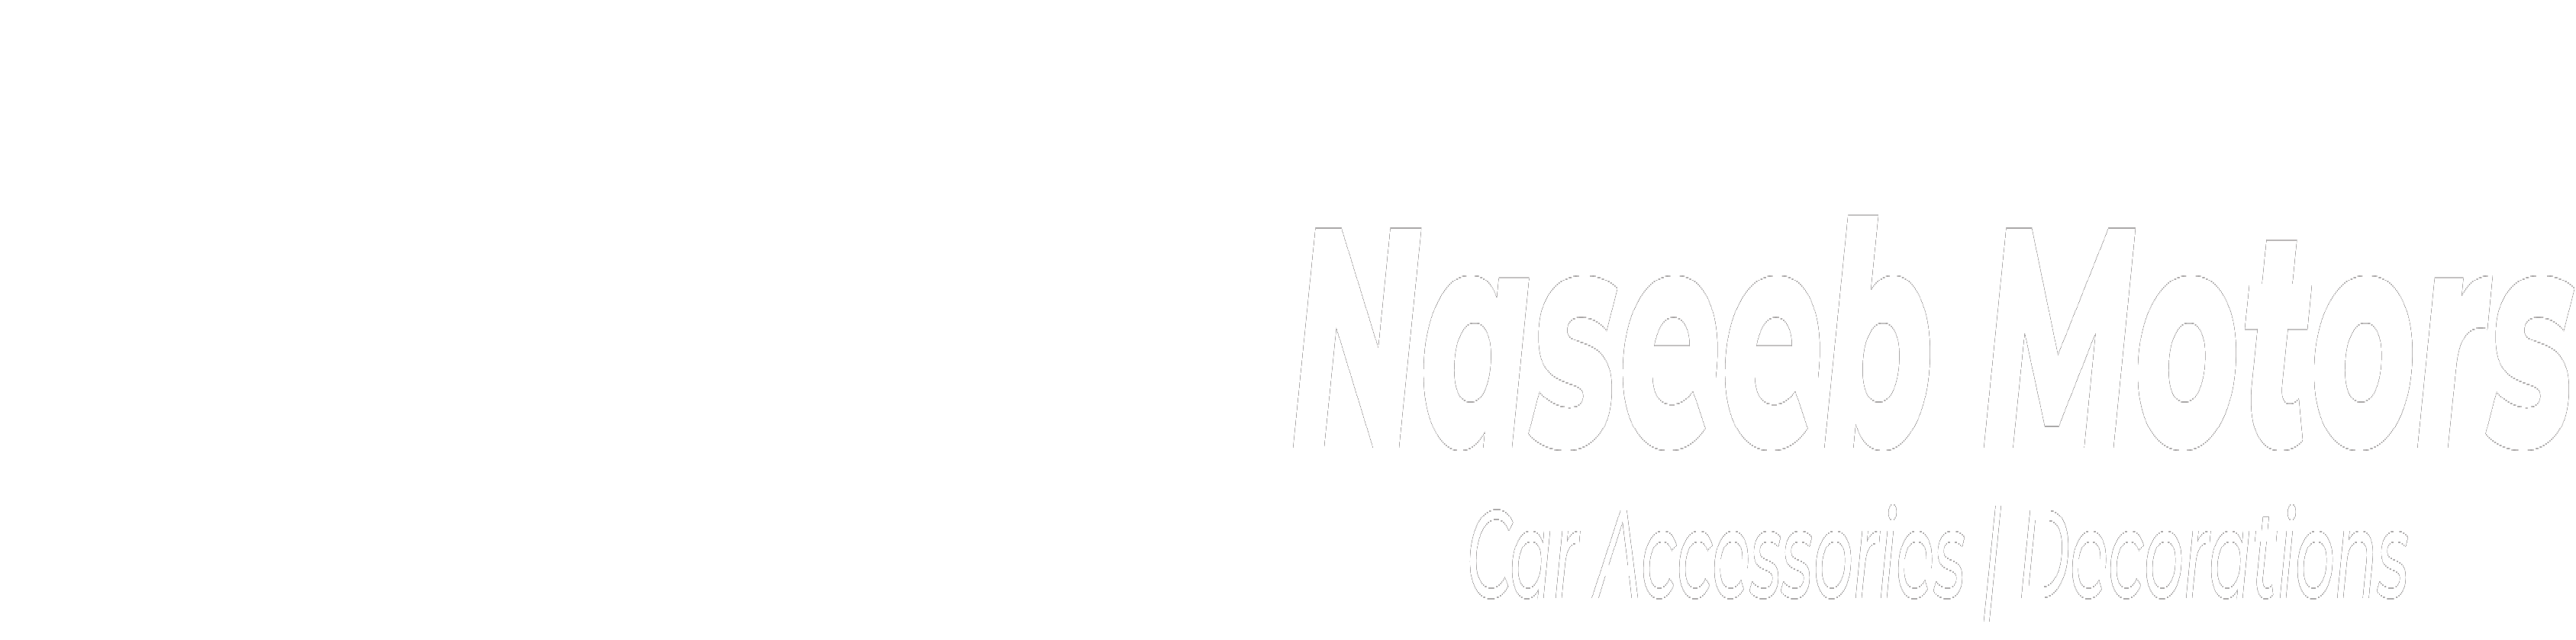 Naseeb Motors